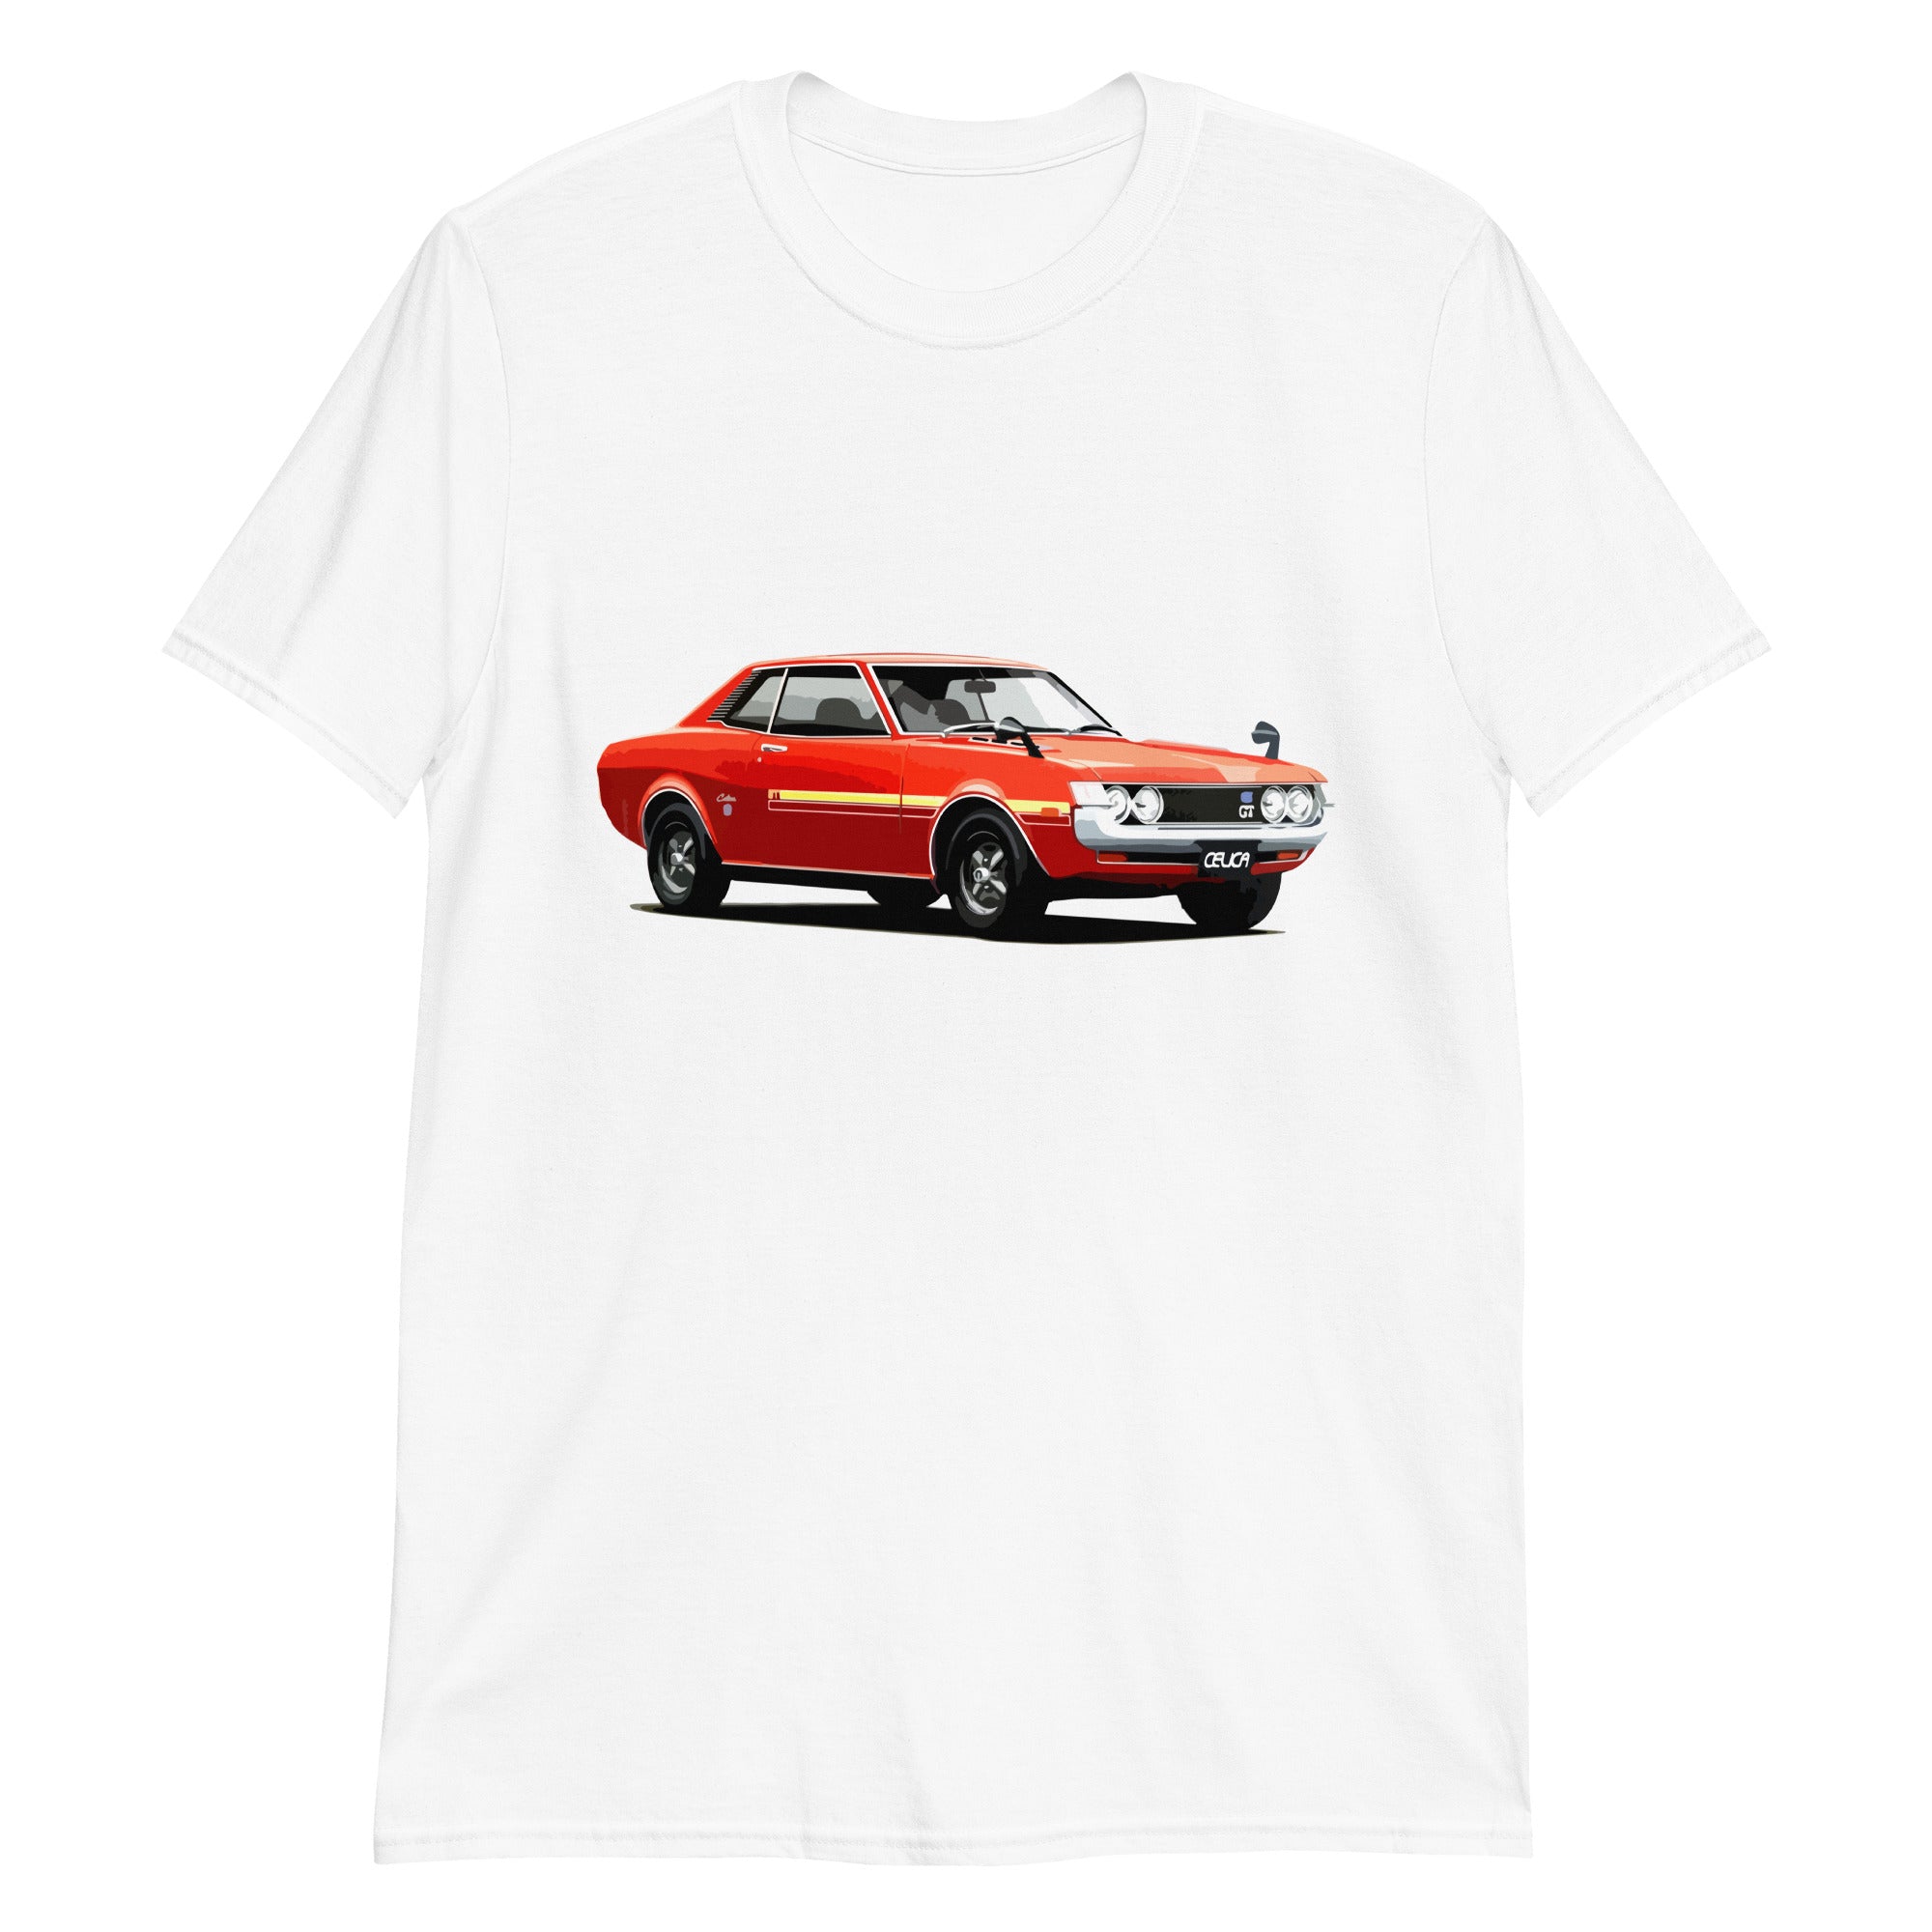 1972 Celica 1600GT JDM Japanese Vintage Car Short-Sleeve Unisex T-Shirt